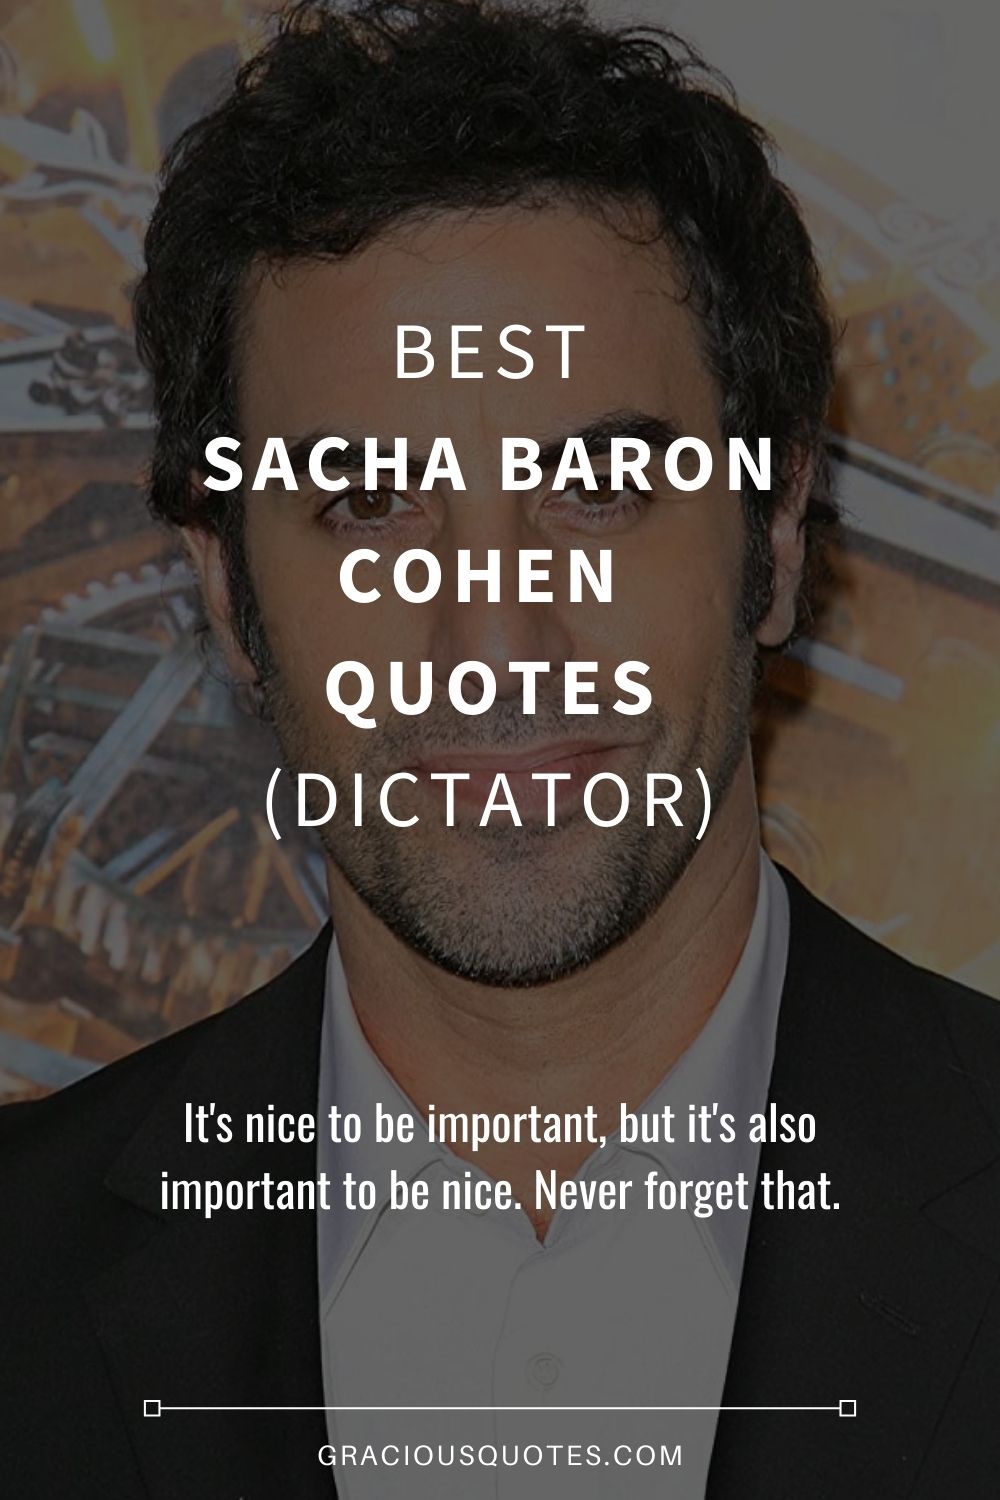 Best Sacha Baron Cohen Quotes (DICTATOR) - Gracious Quotes